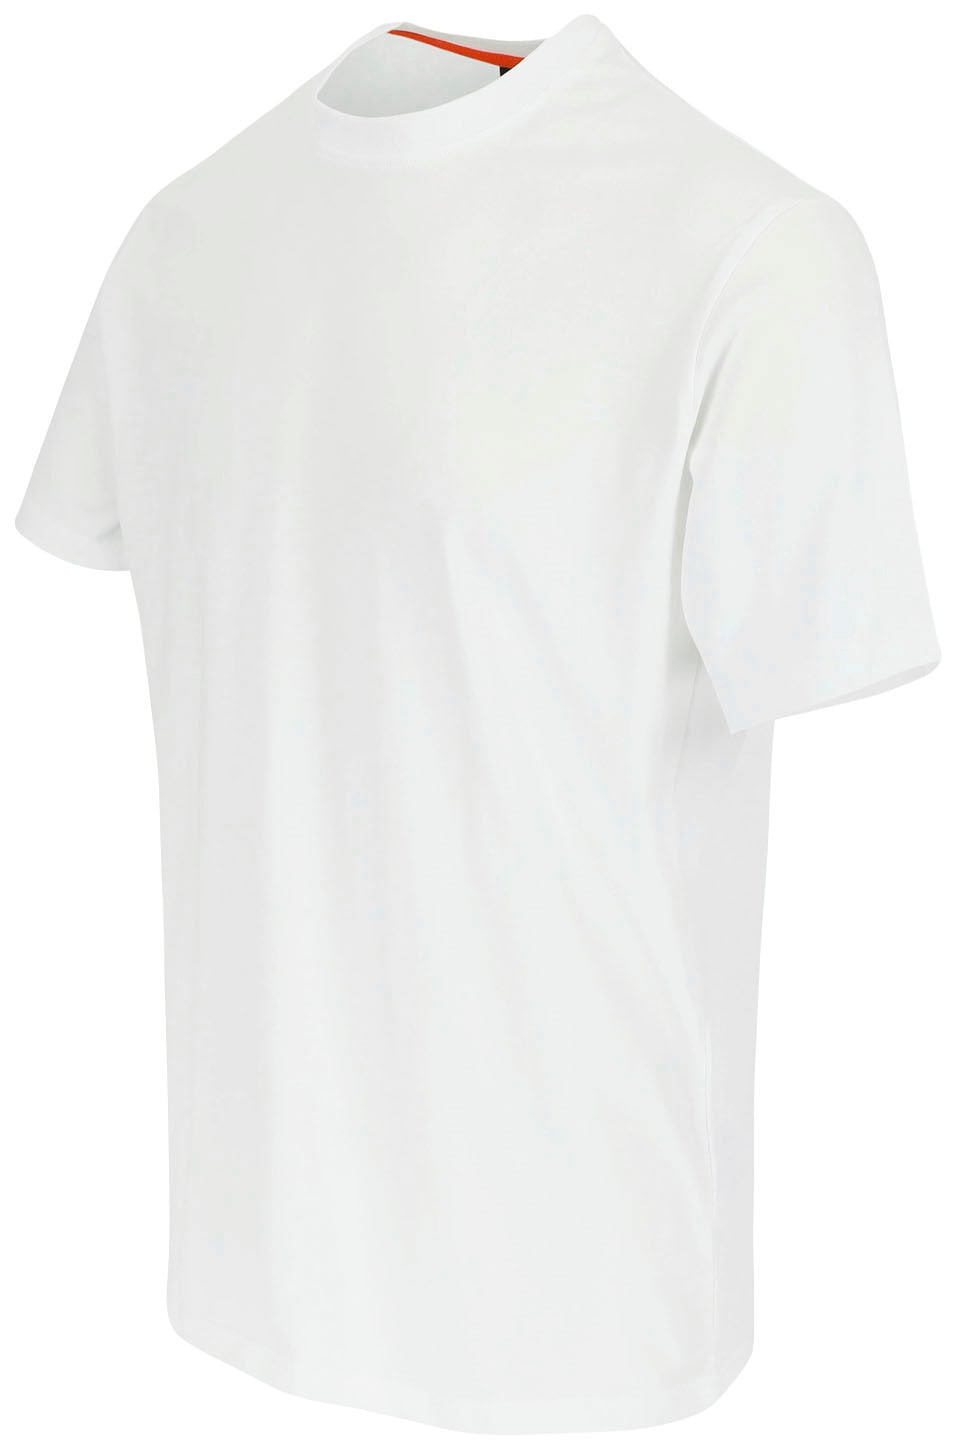 Herock T-Shirt »Argo T-Shirt Kurzärmlig«, (Spar-Set, 3 tlg.), Kurze Ärmel, angenehmes  Tragegefühl mit Rippstrick-Kragen online kaufen bei OTTO